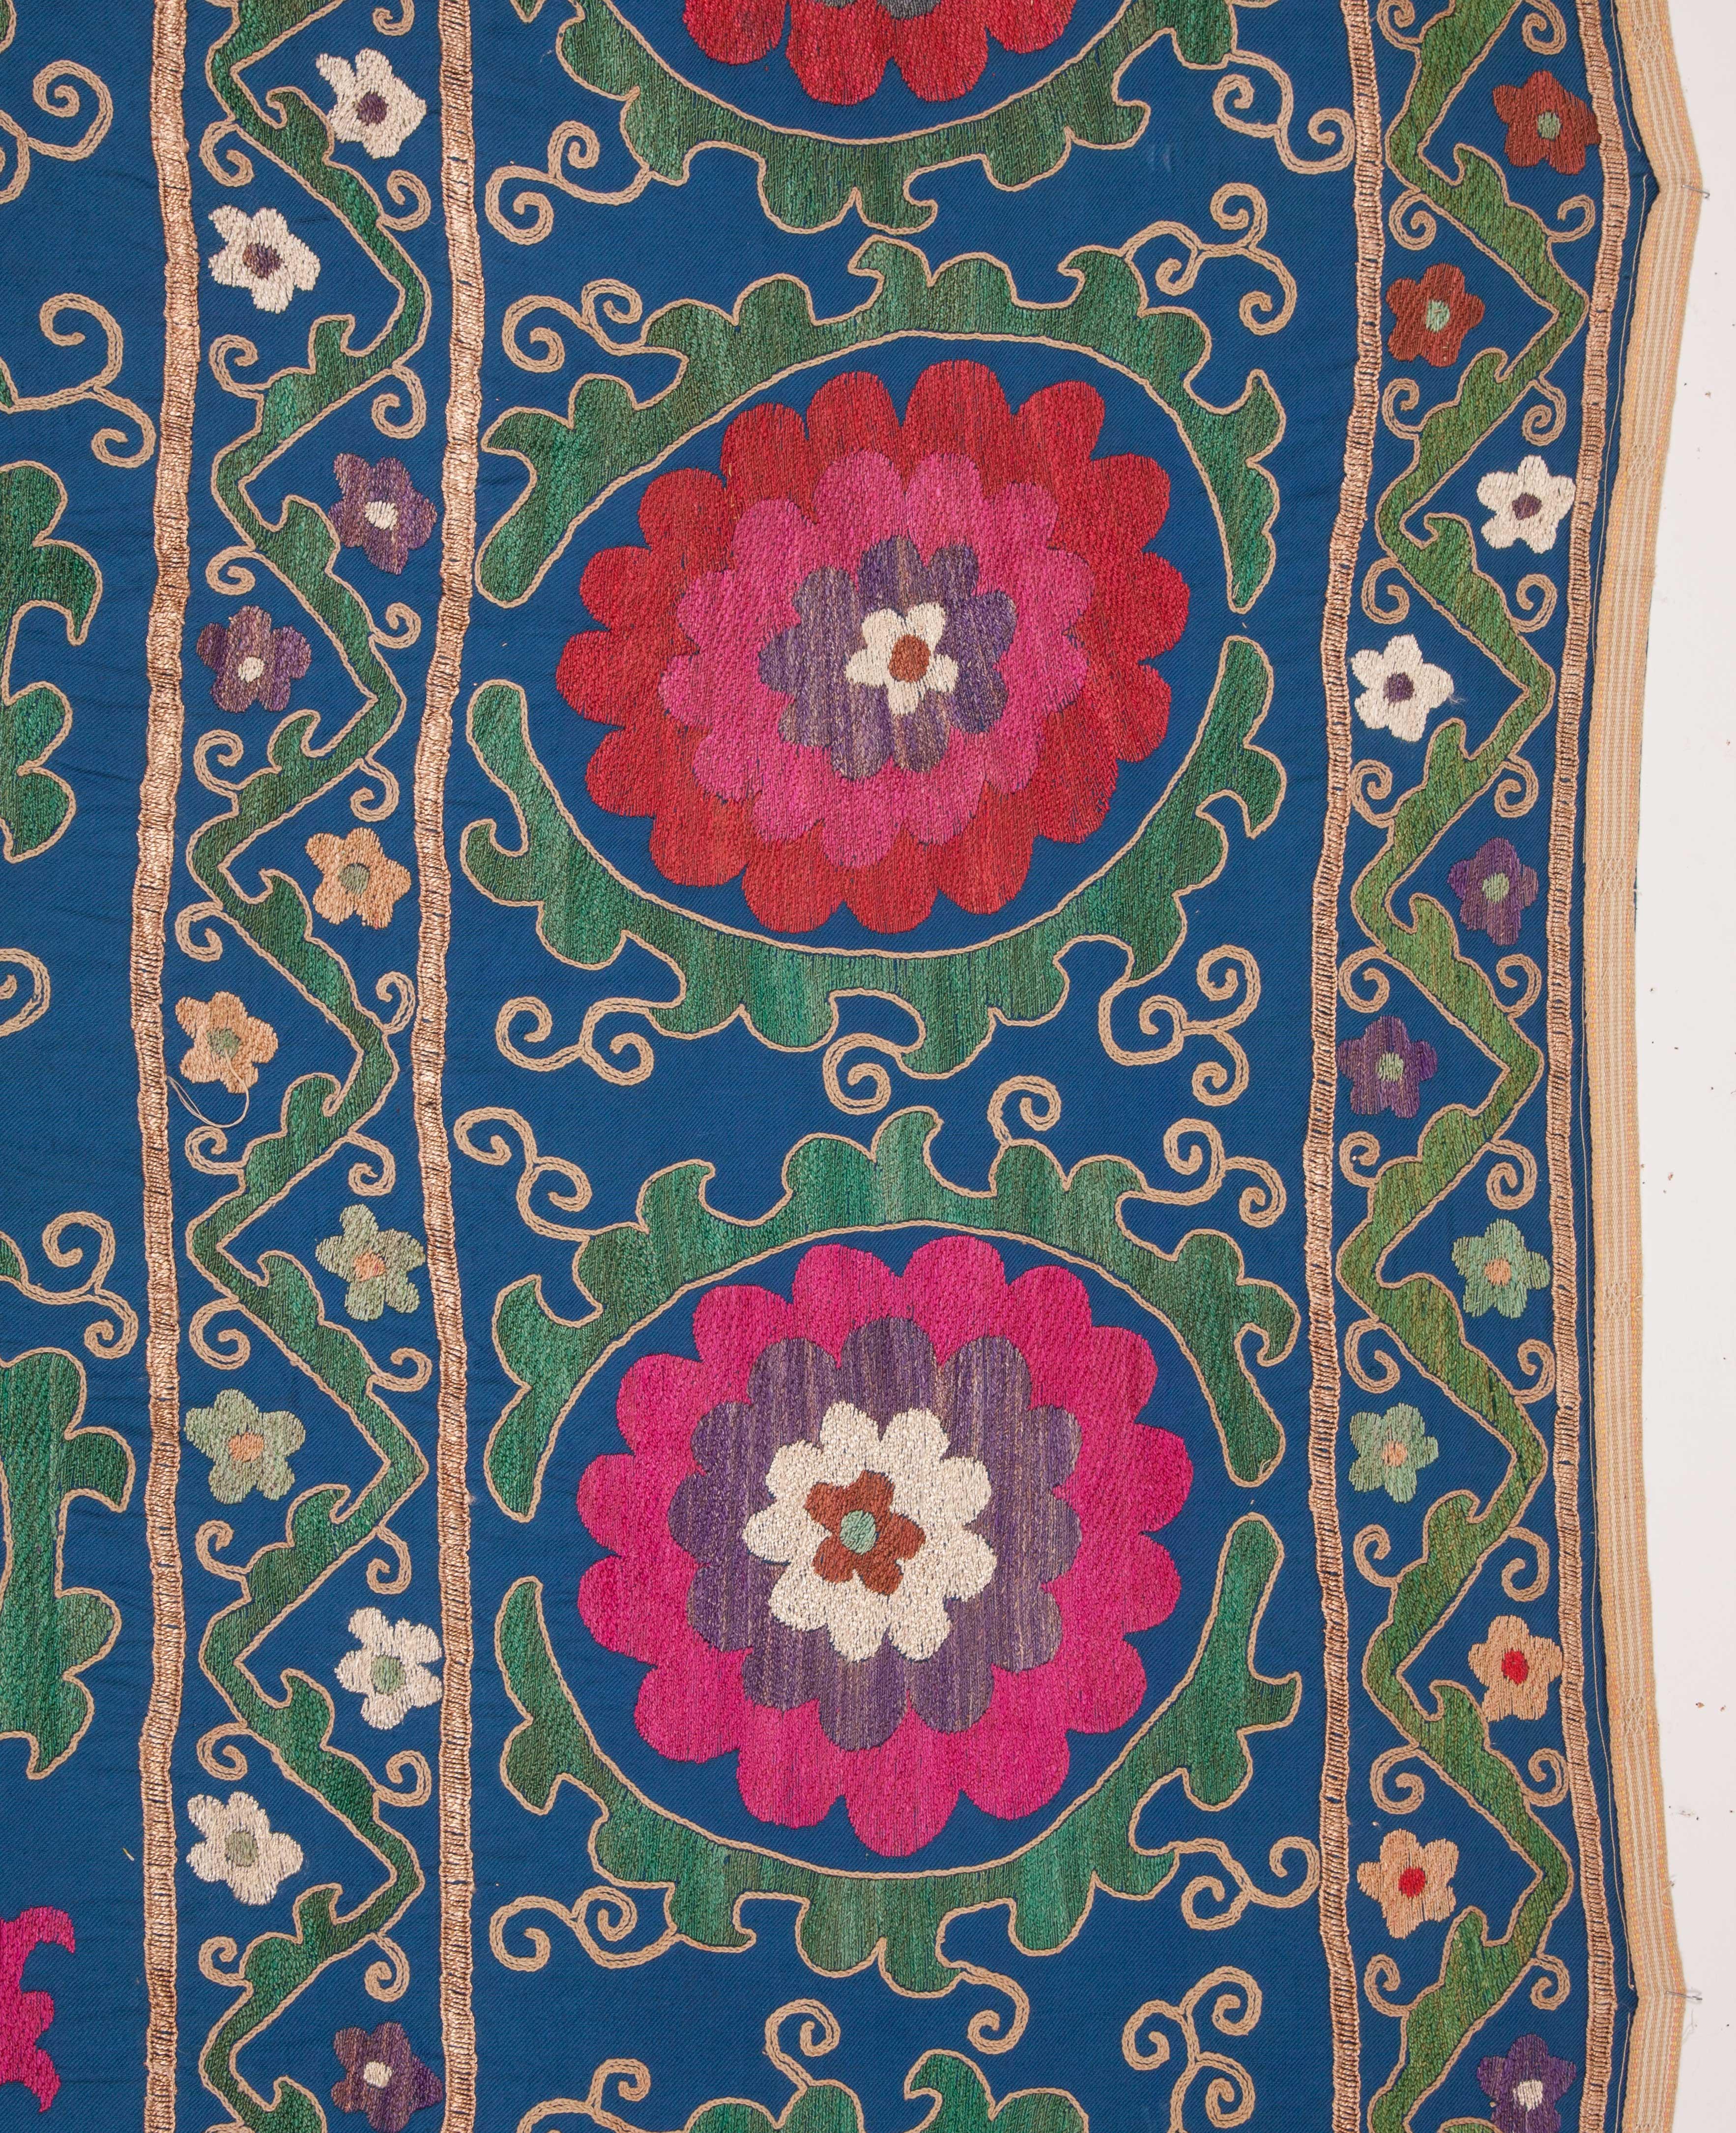 Cotton Mid-20th Century Suzani from Uzbekistan, Central Asia